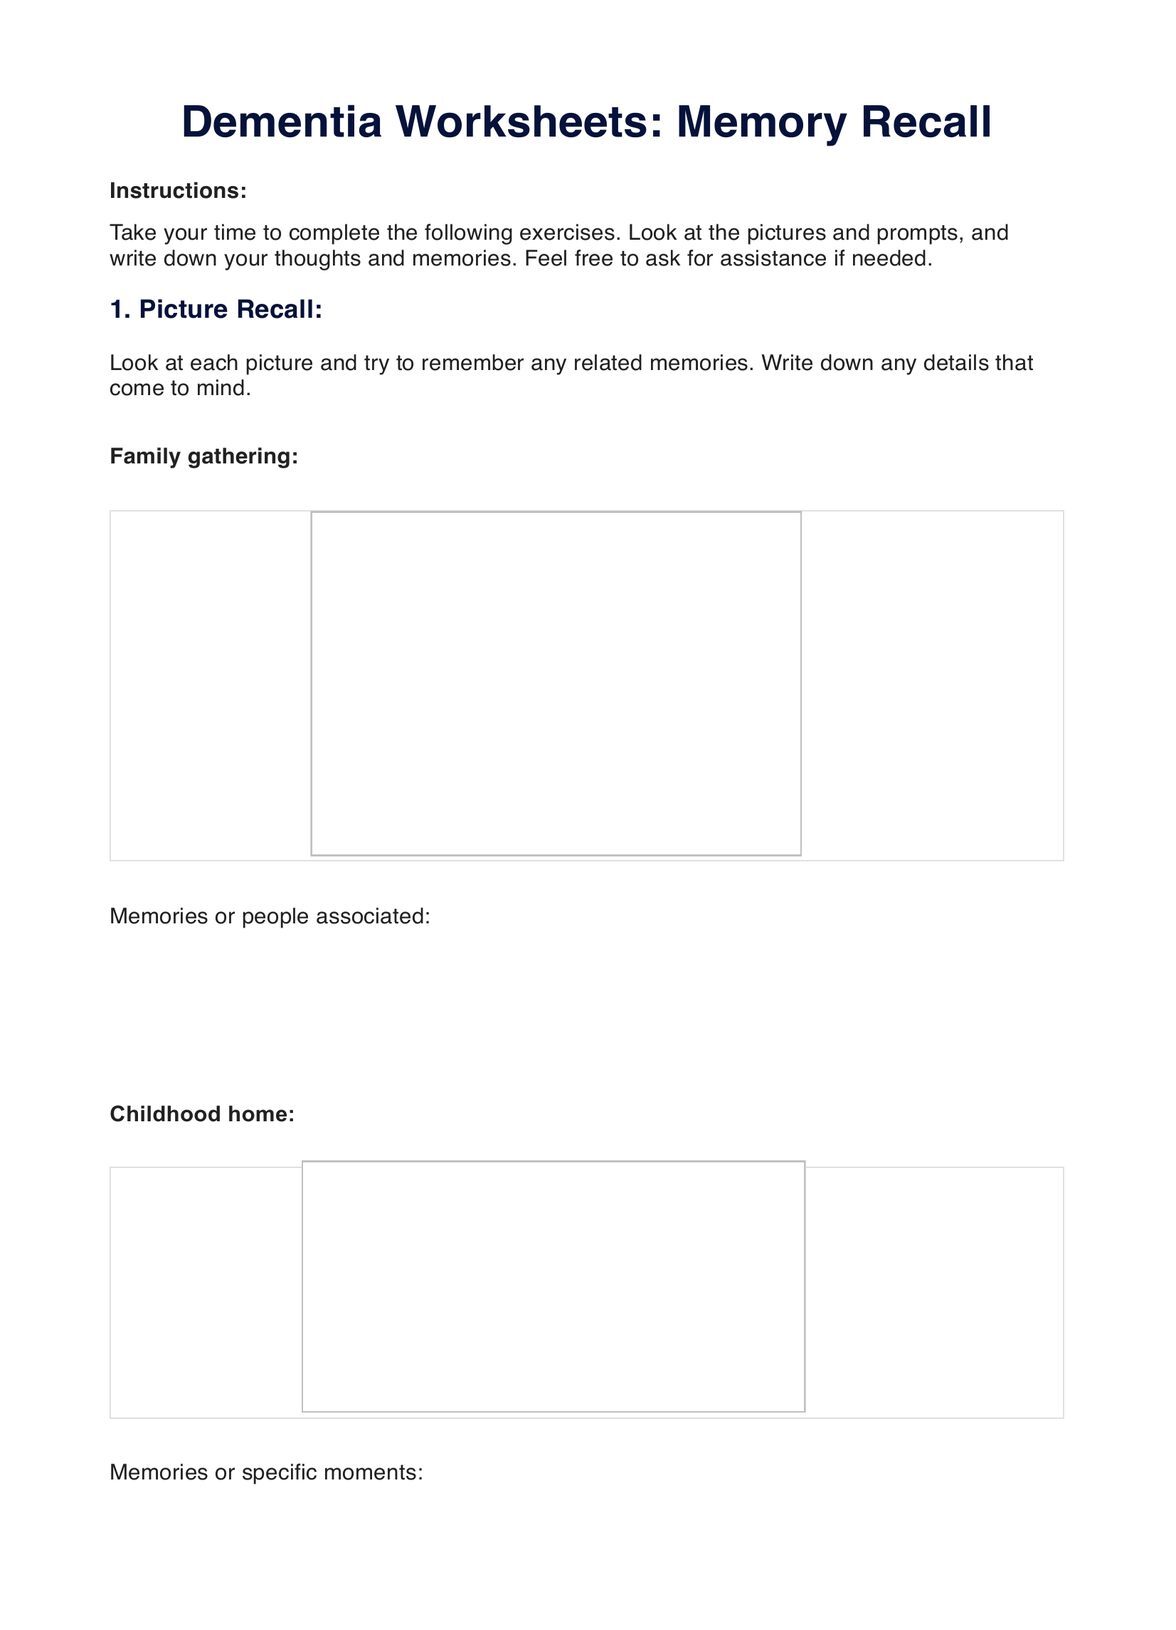 Dementia Worksheets PDF PDF Example